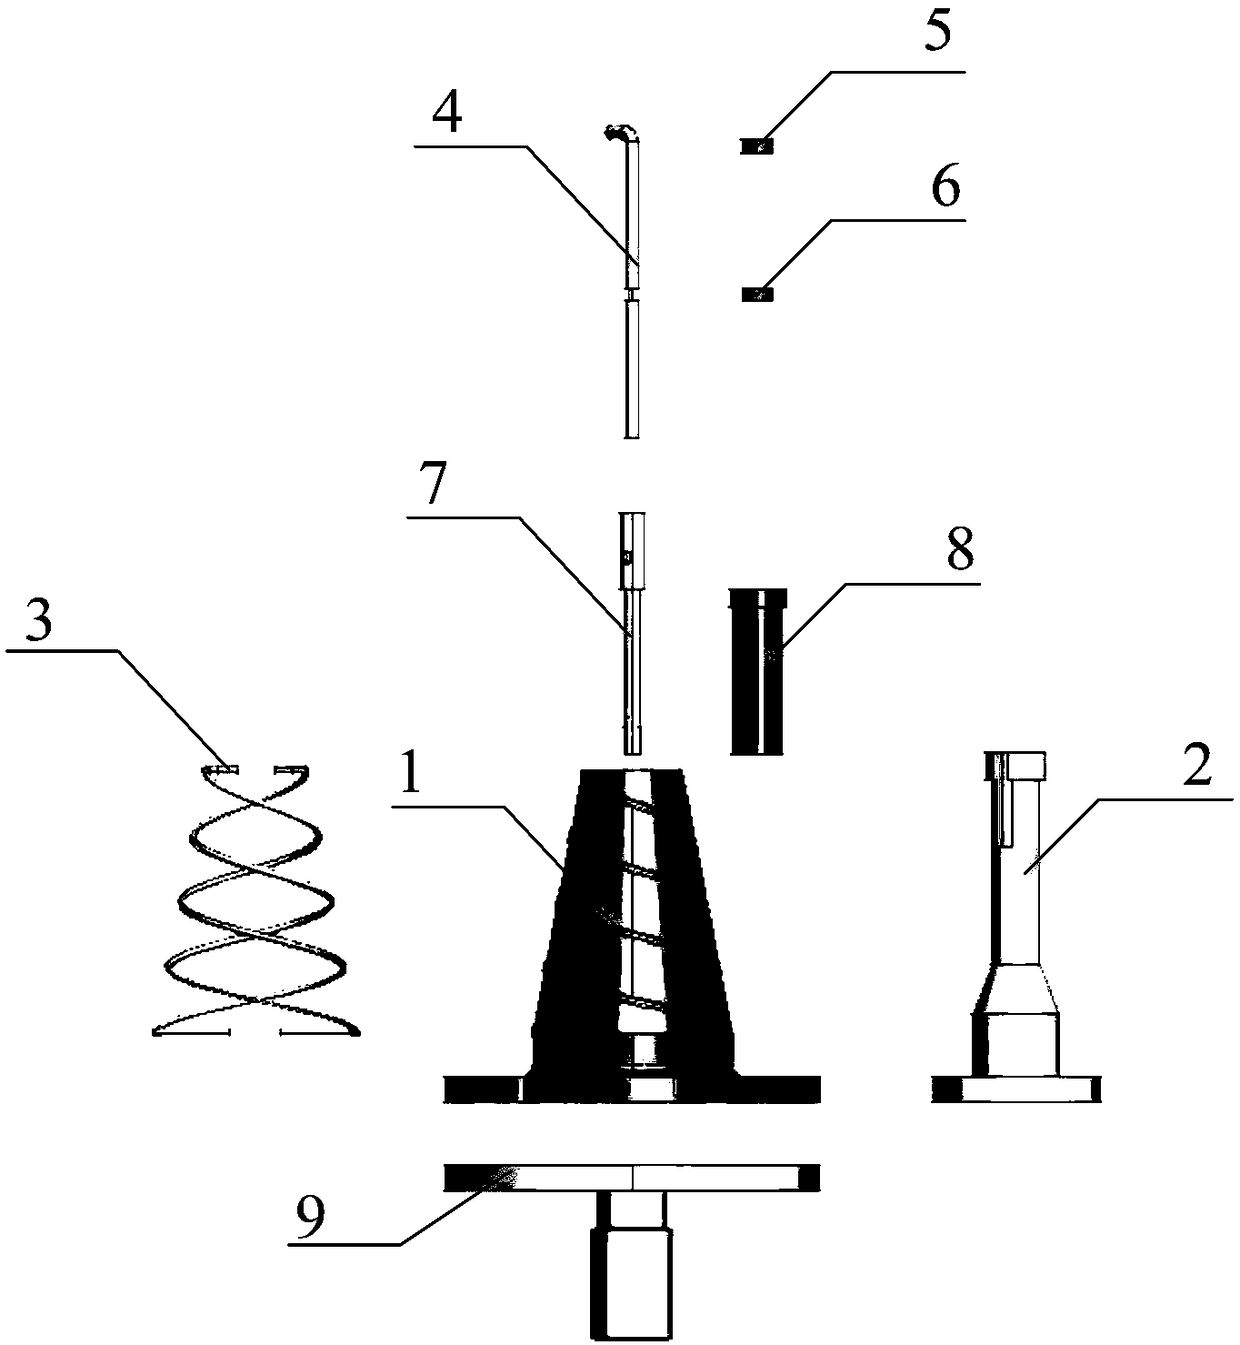 X-band miniaturized cone-spiral antenna